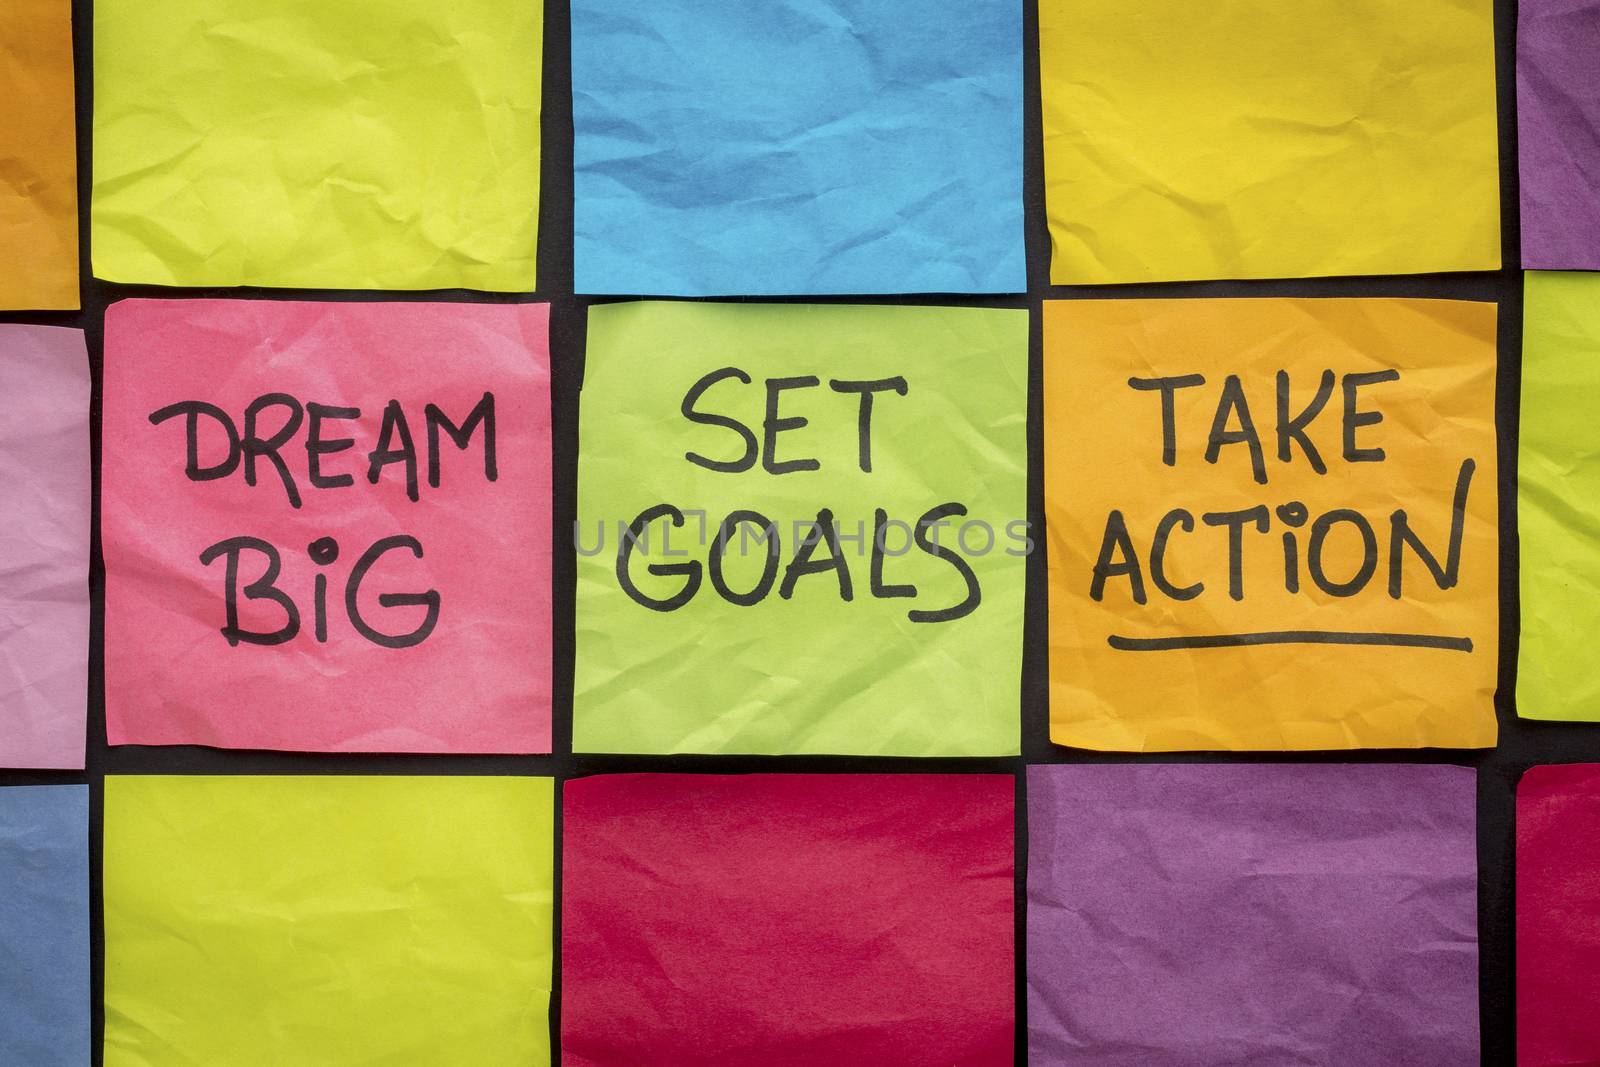 dream big, set goals, take action by PixelsAway